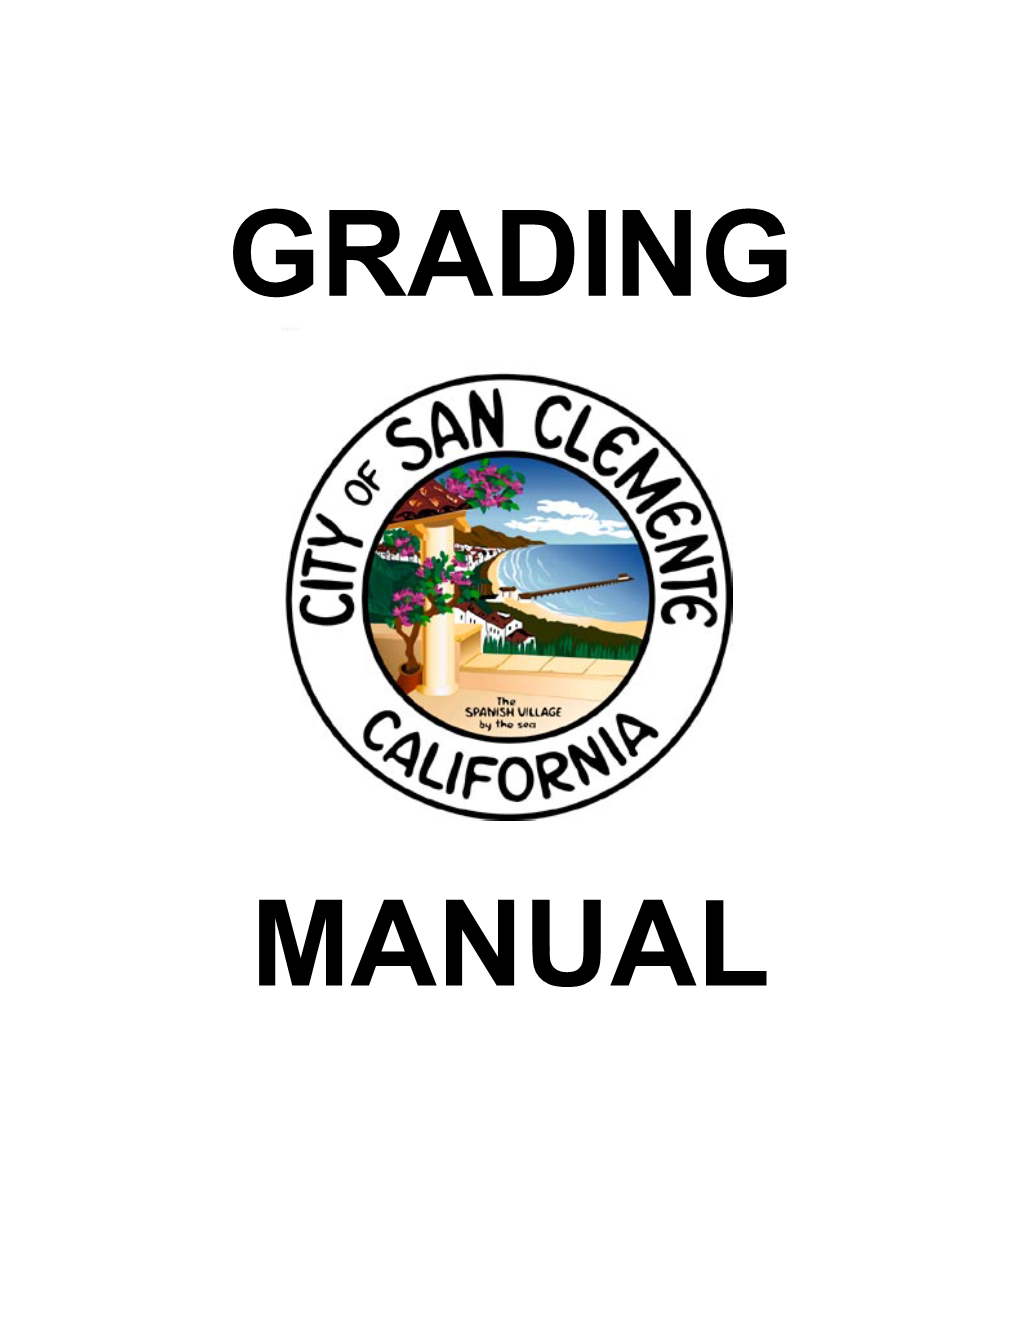 Grading Manual